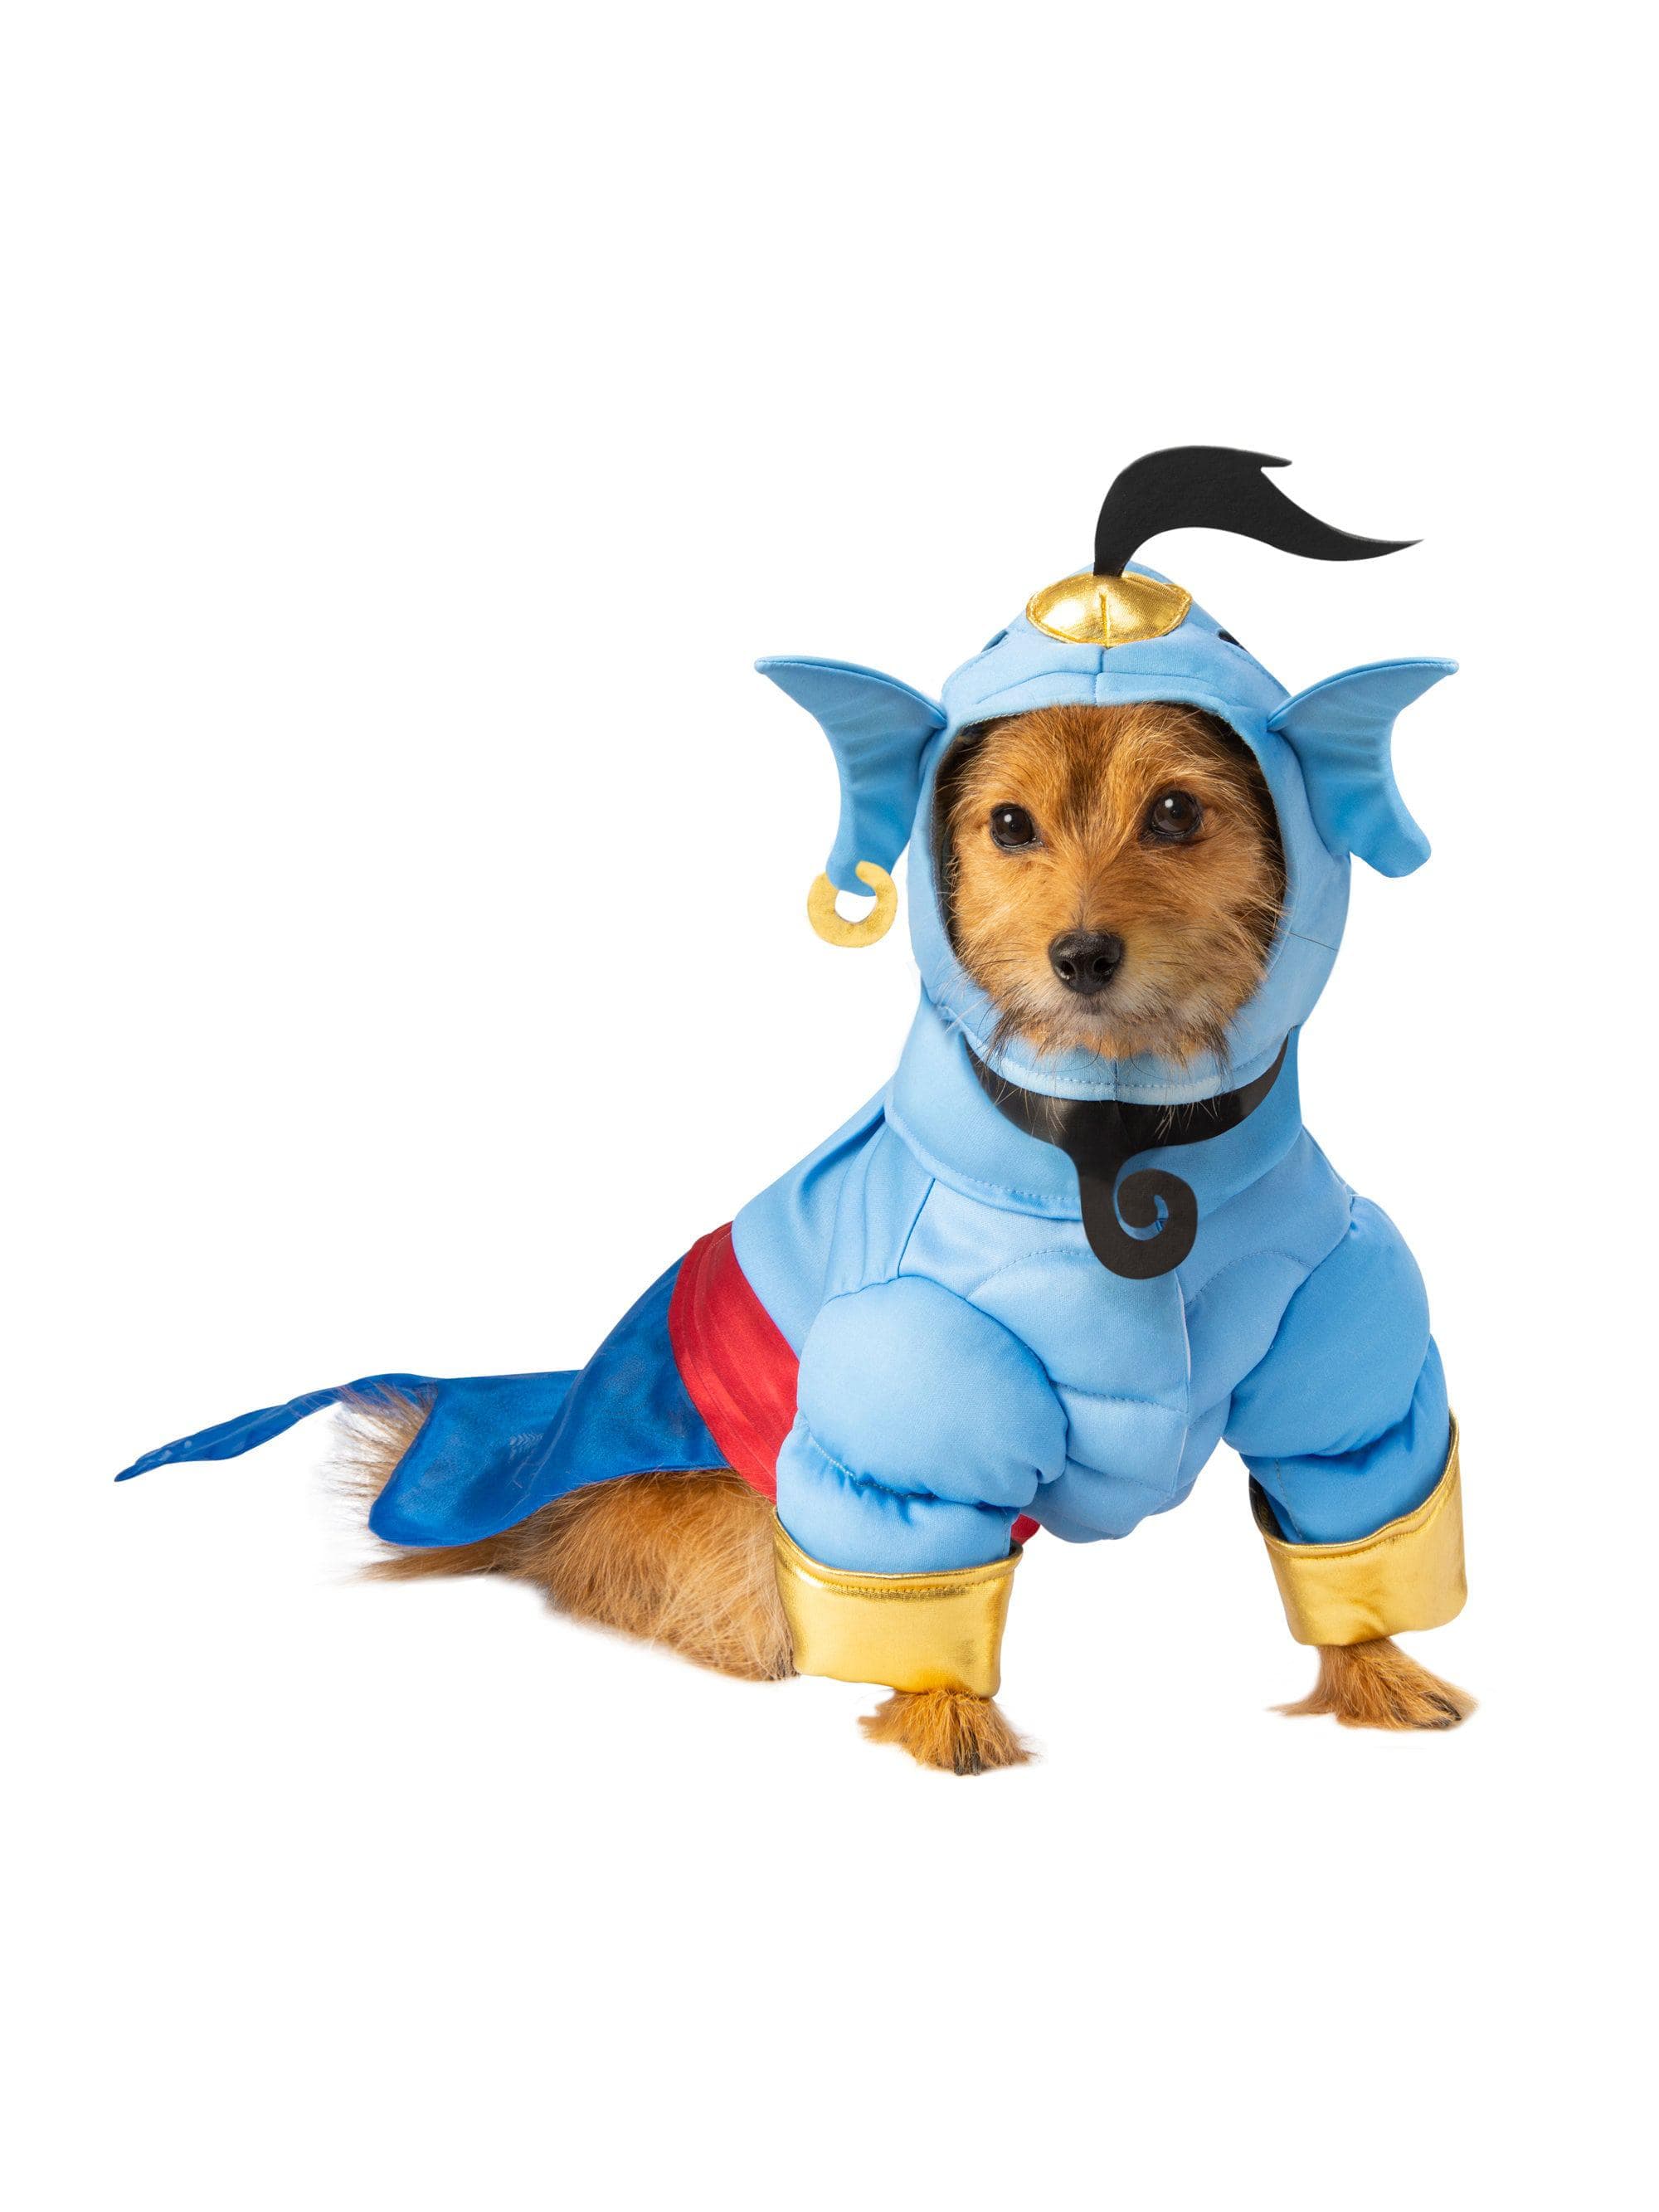 Aladdin Genie Pet Costume - costumes.com